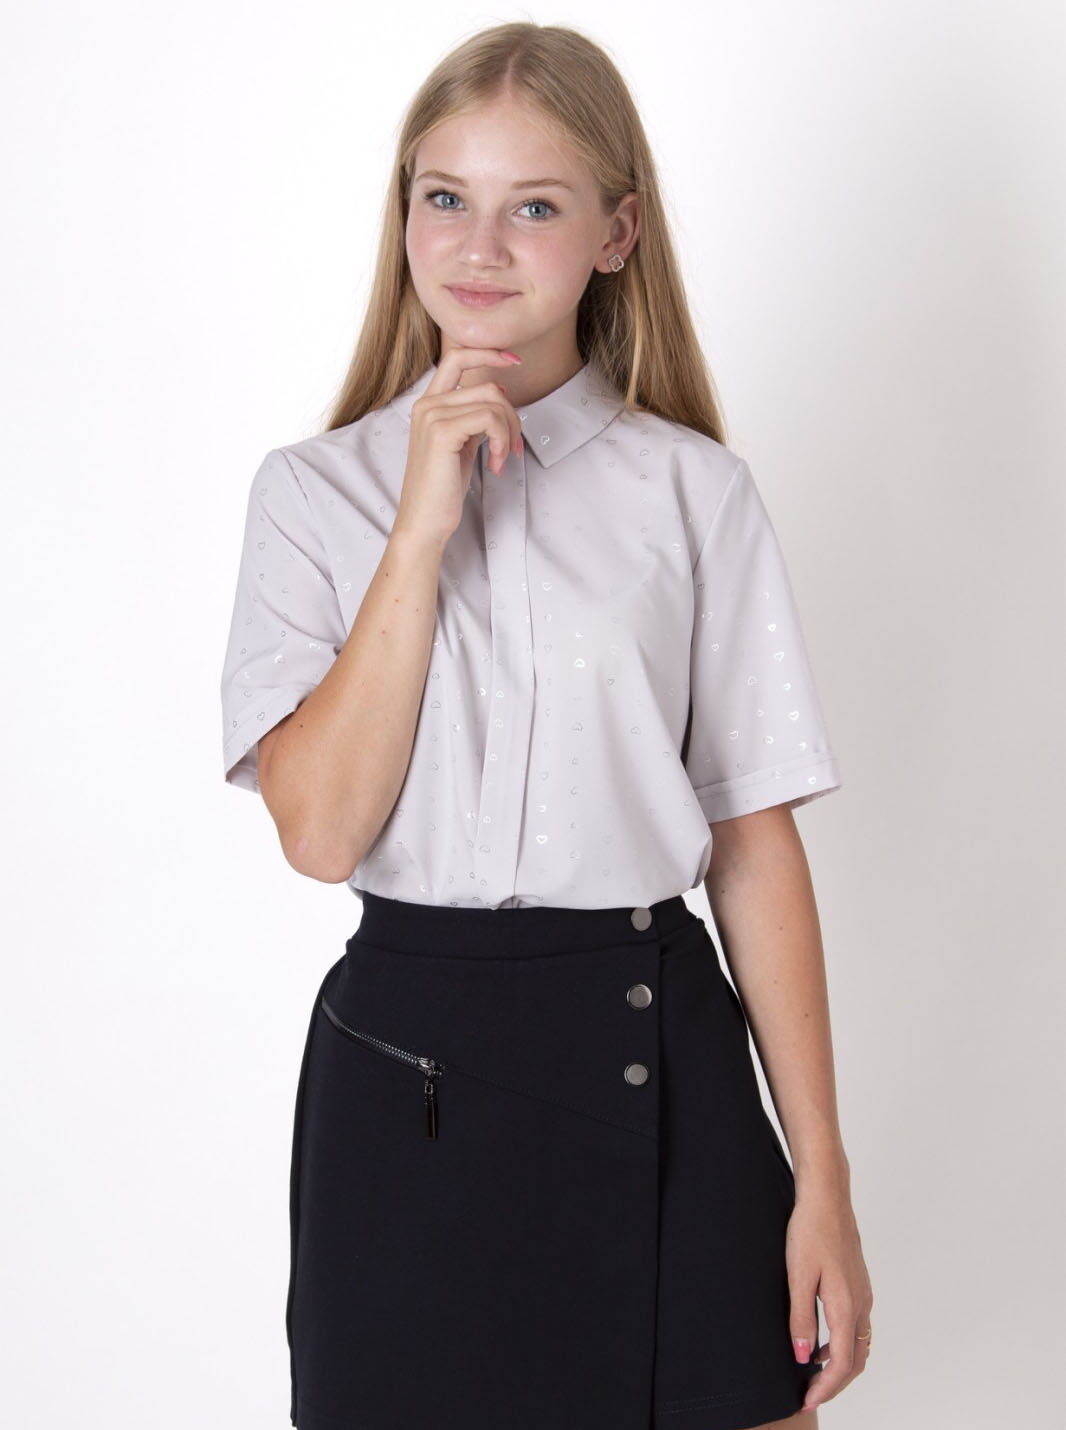 Блузка с коротким рукавом для девочки Mevis Сердечки серая 2660-01 - цена